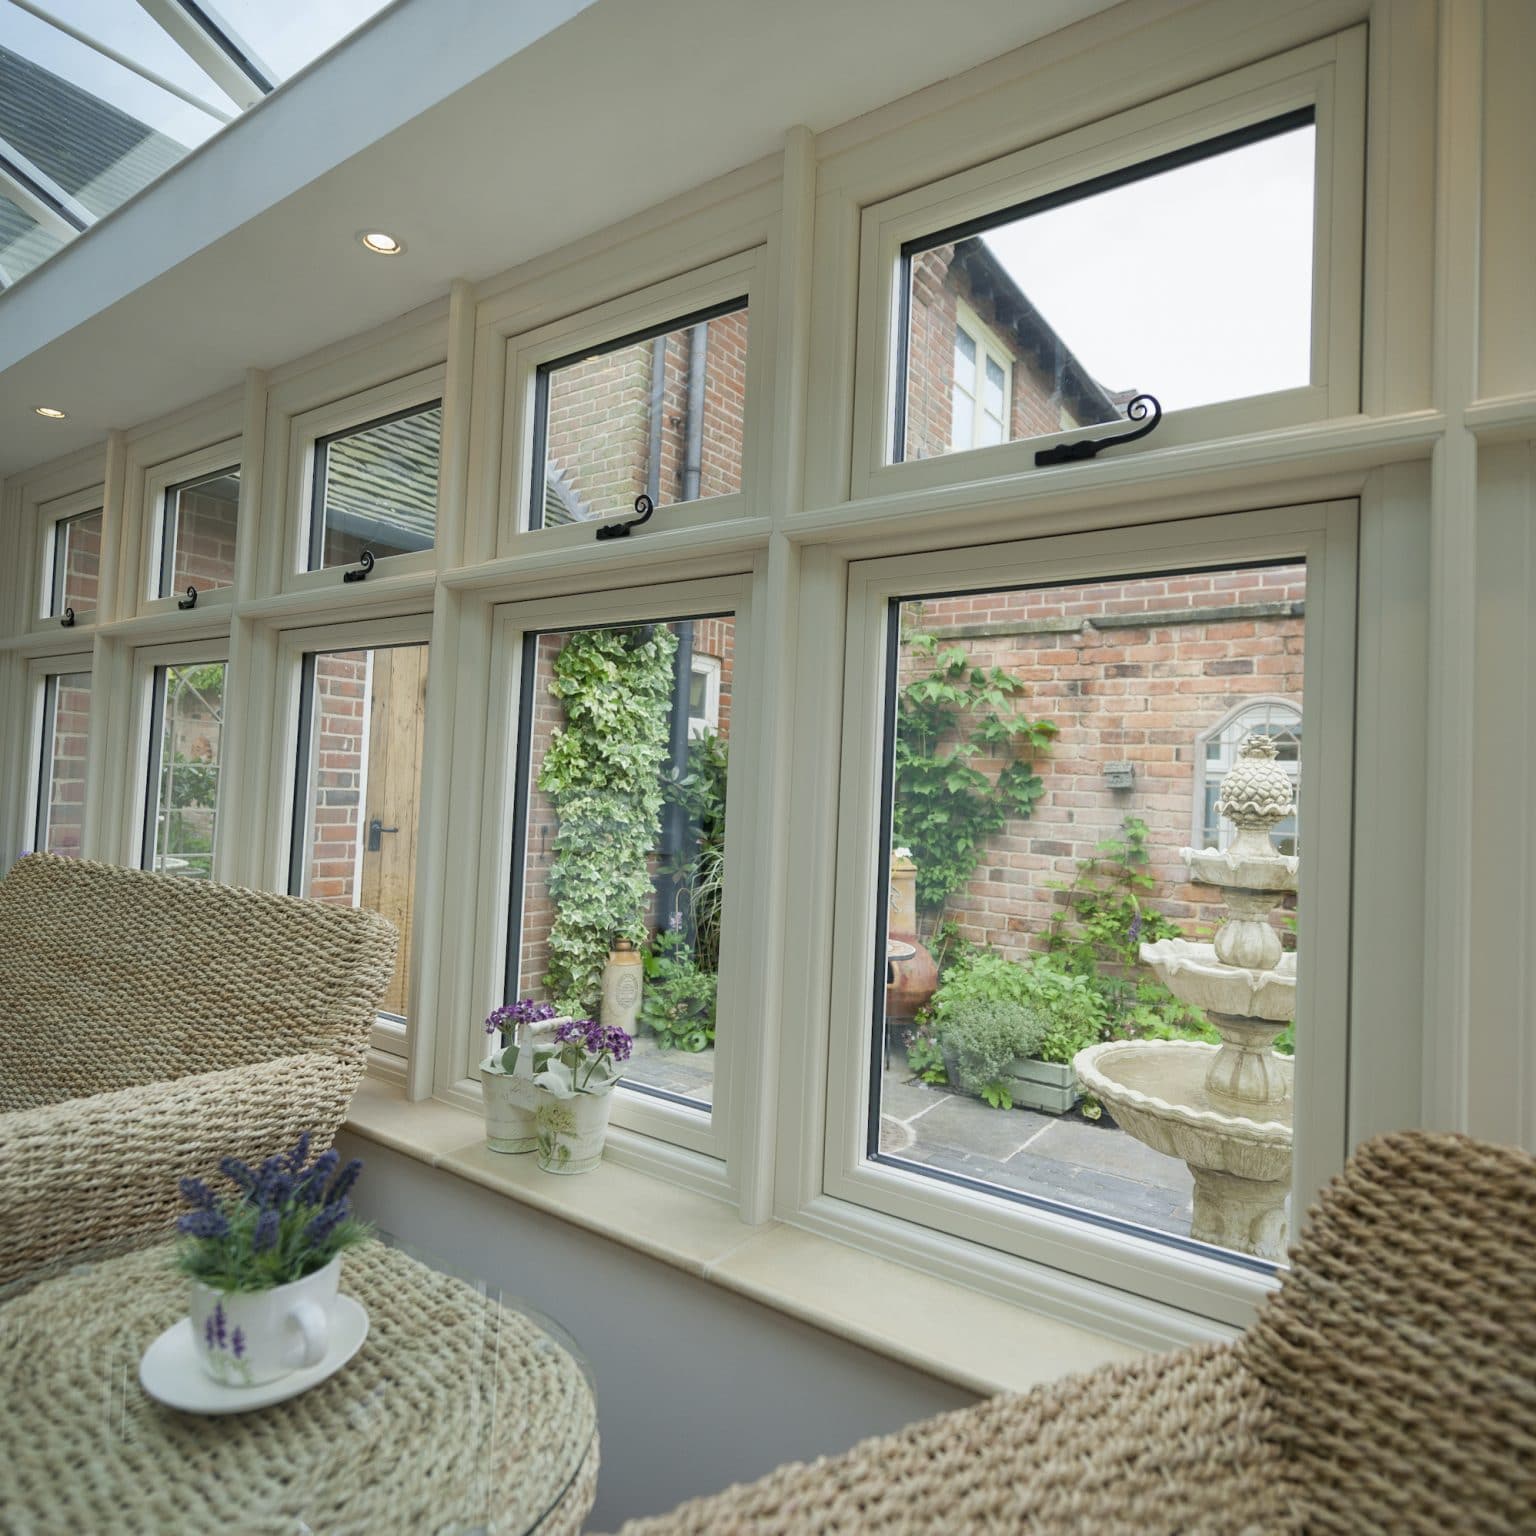 residence 9 windows in cream colour